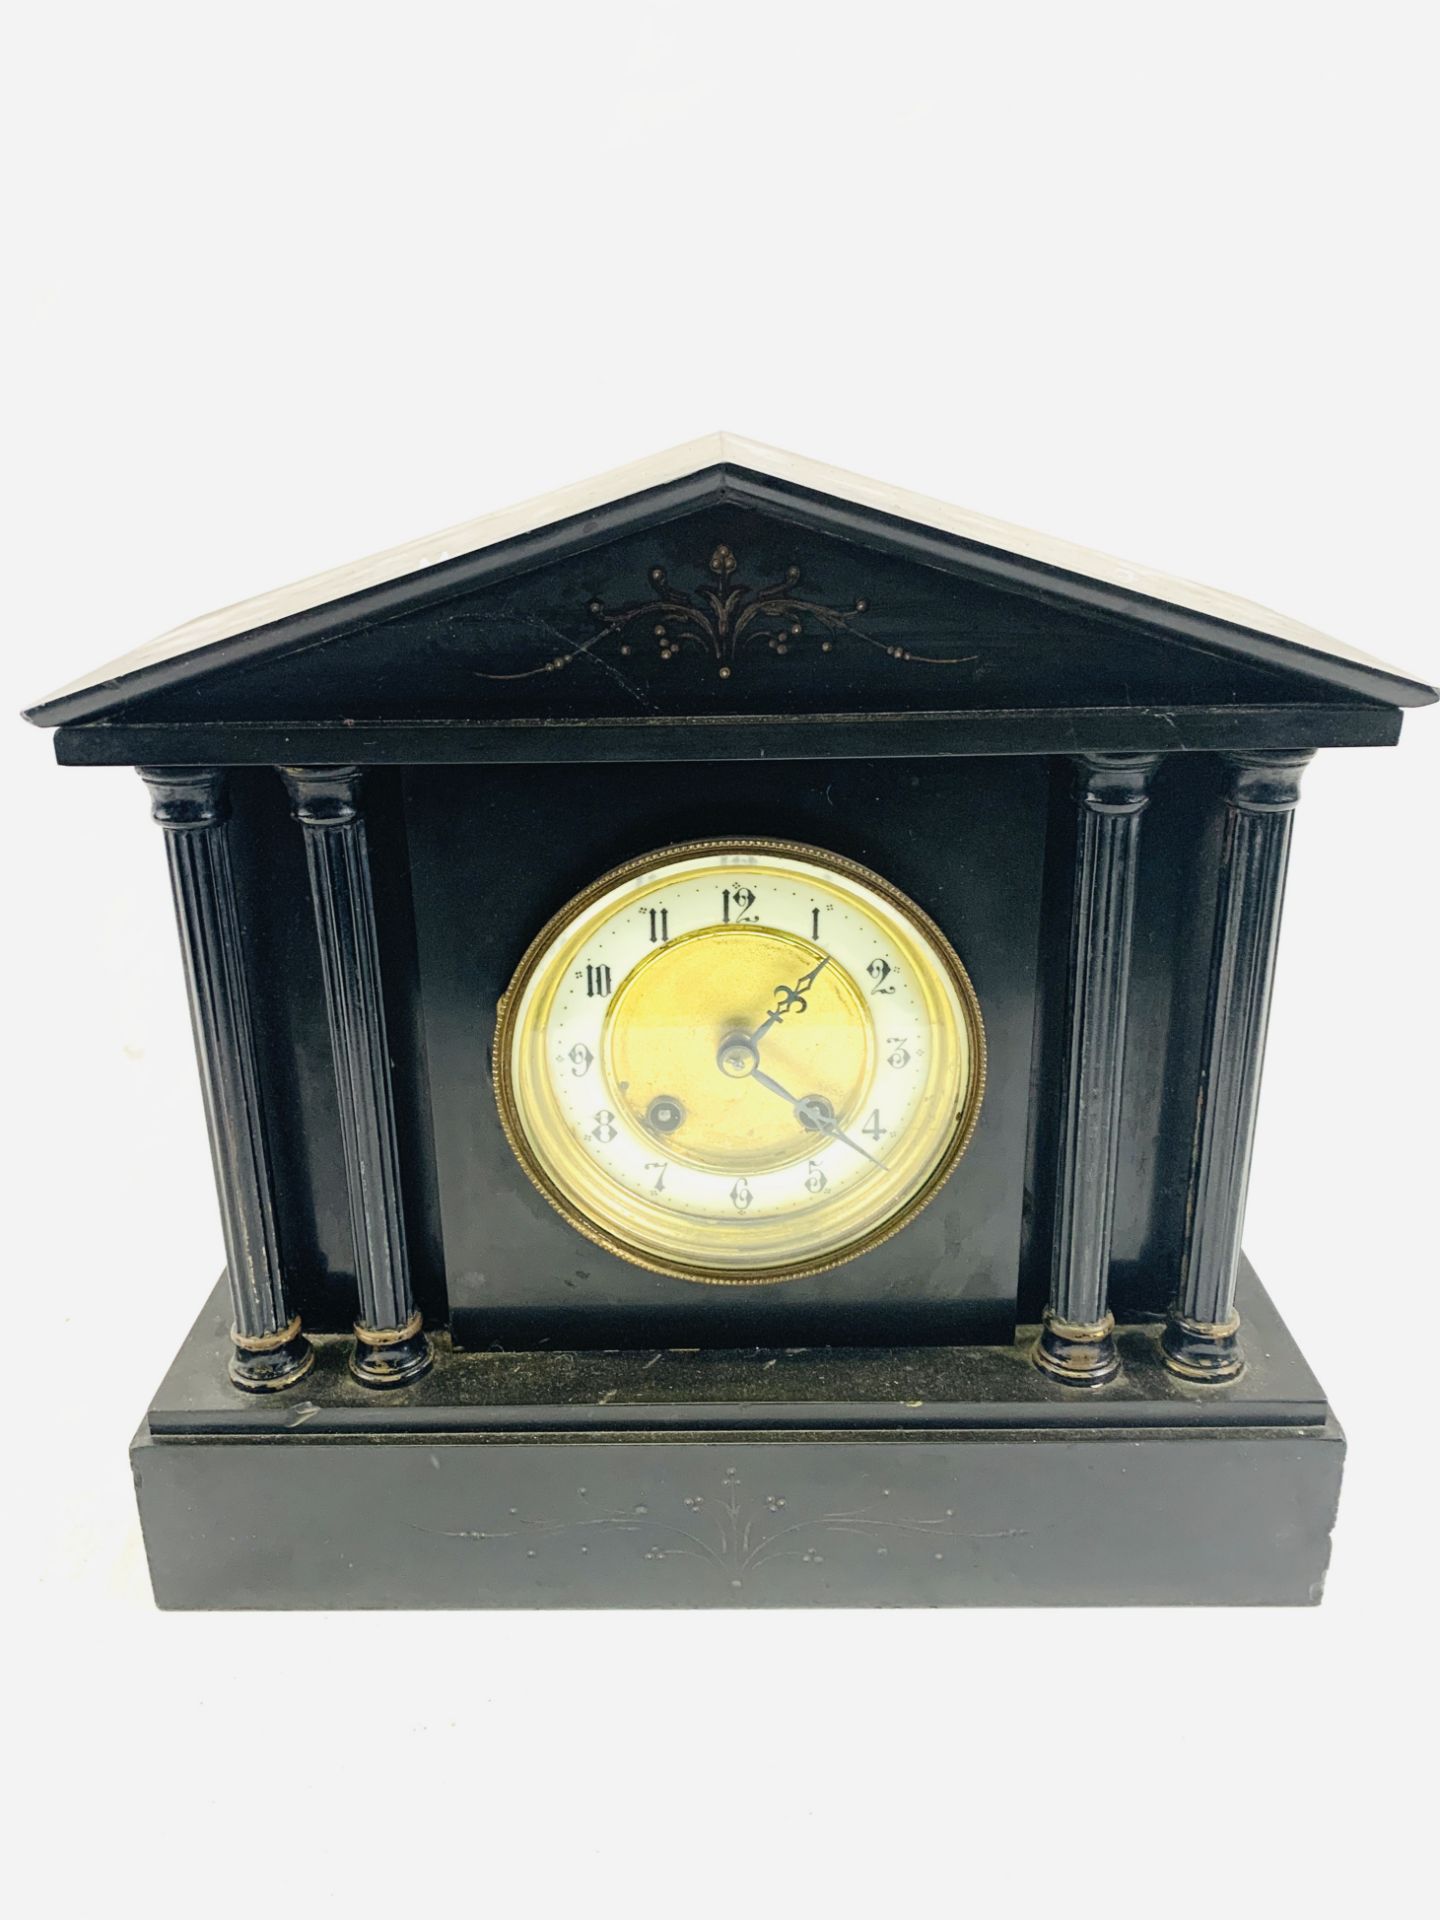 Three slate mantel clocks together with a wood cased mantel clock